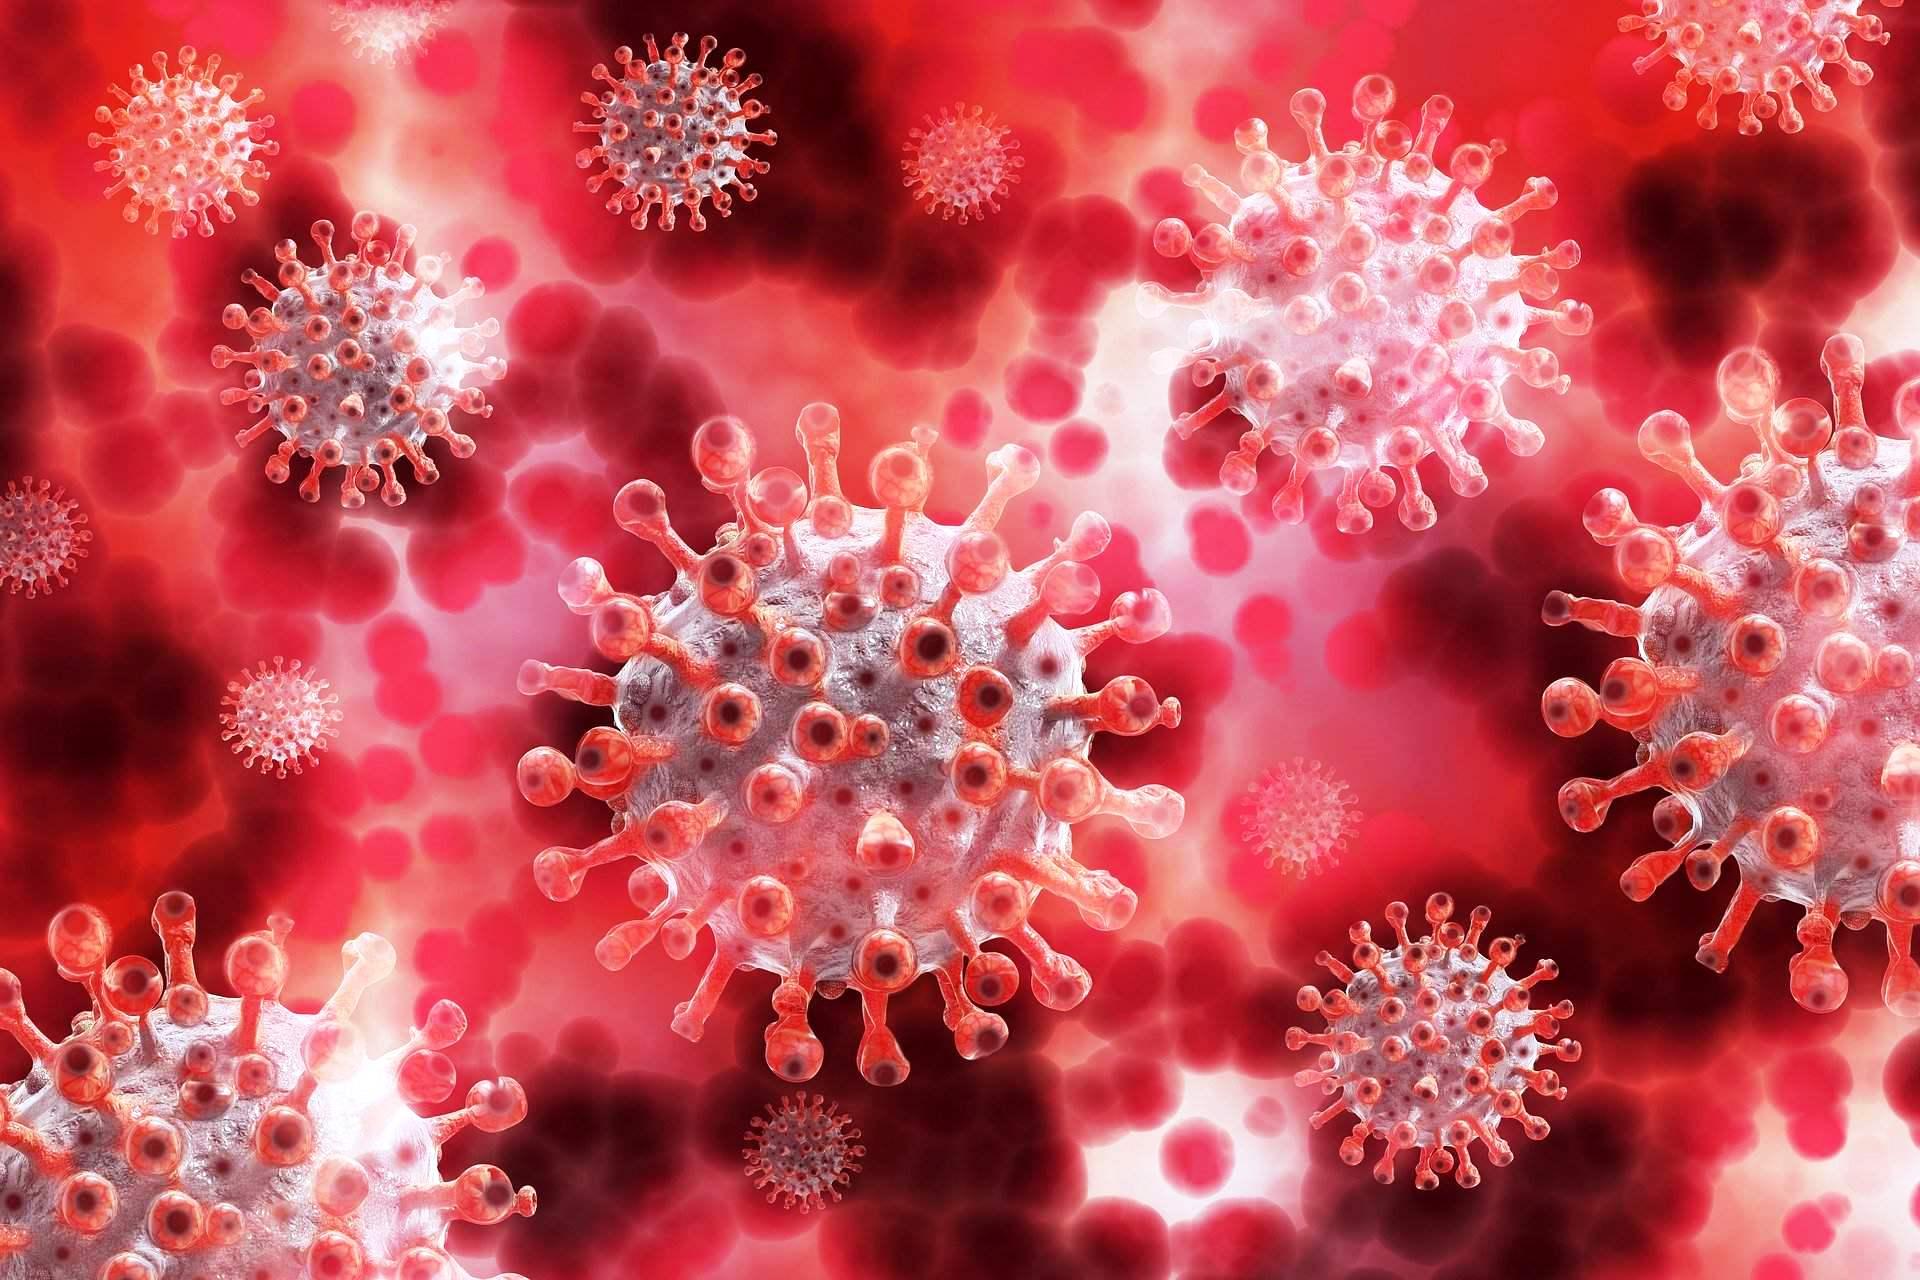 ES ultrapassa 9.5 mil mortes pelo coronavírus e casos chega a 437.862 